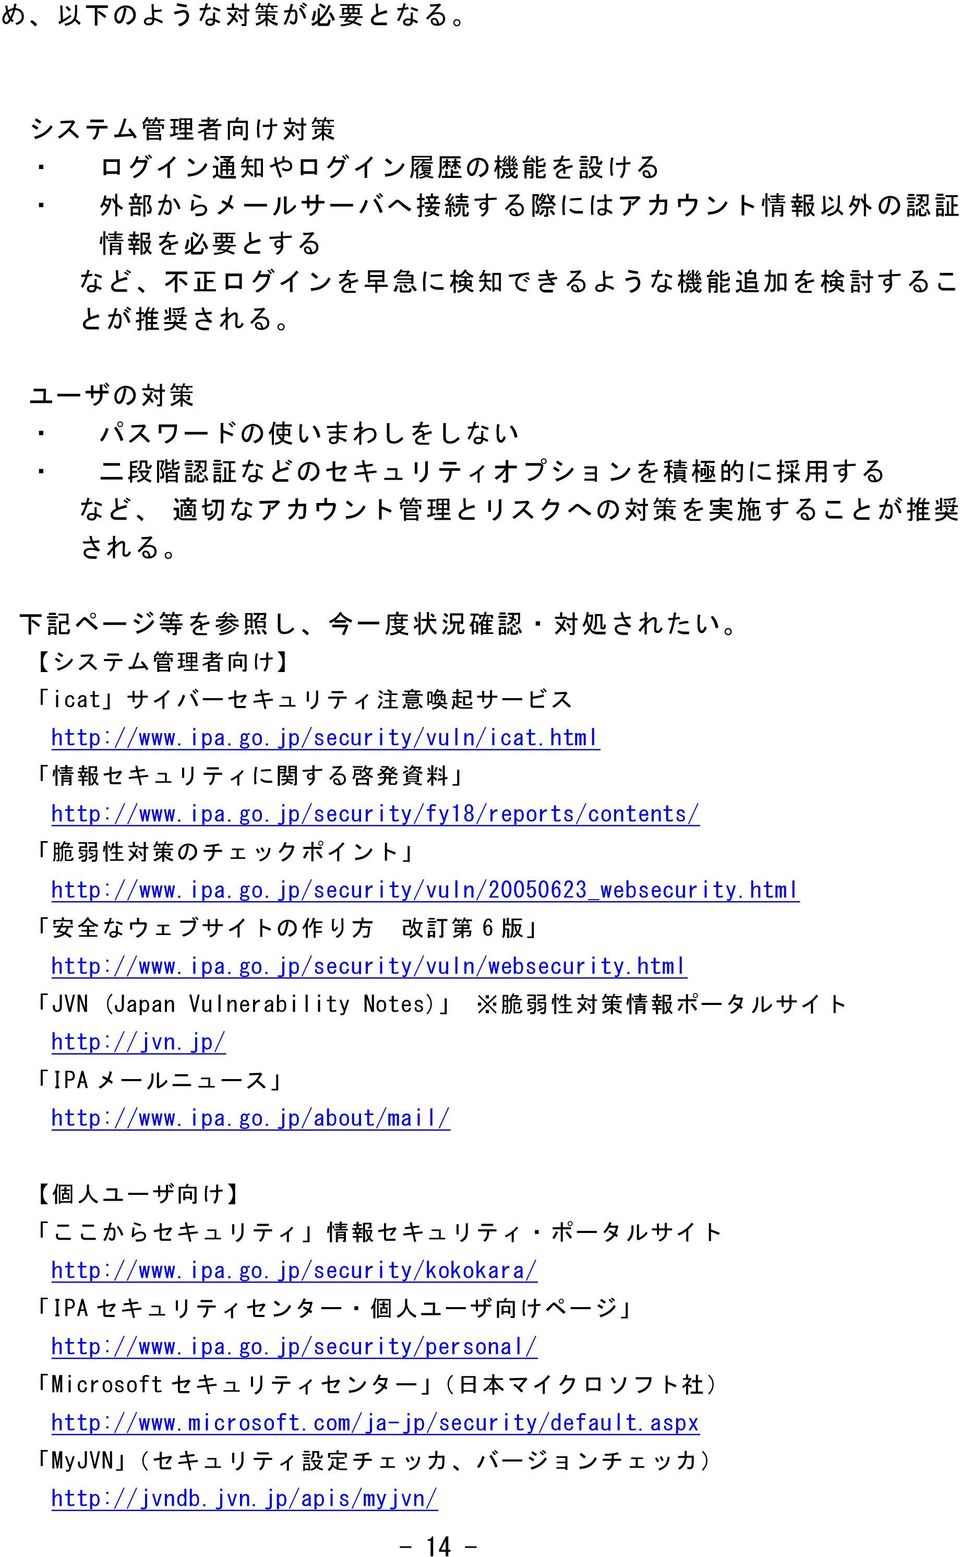 http://www.ipa.go.jp/security/vuln/icat.html 情 報 セキュリティに 関 する 啓 発 資 料 http://www.ipa.go.jp/security/fy18/reports/contents/ 脆 弱 性 対 策 のチェックポイント http://www.ipa.go.jp/security/vuln/20050623_websecurity.